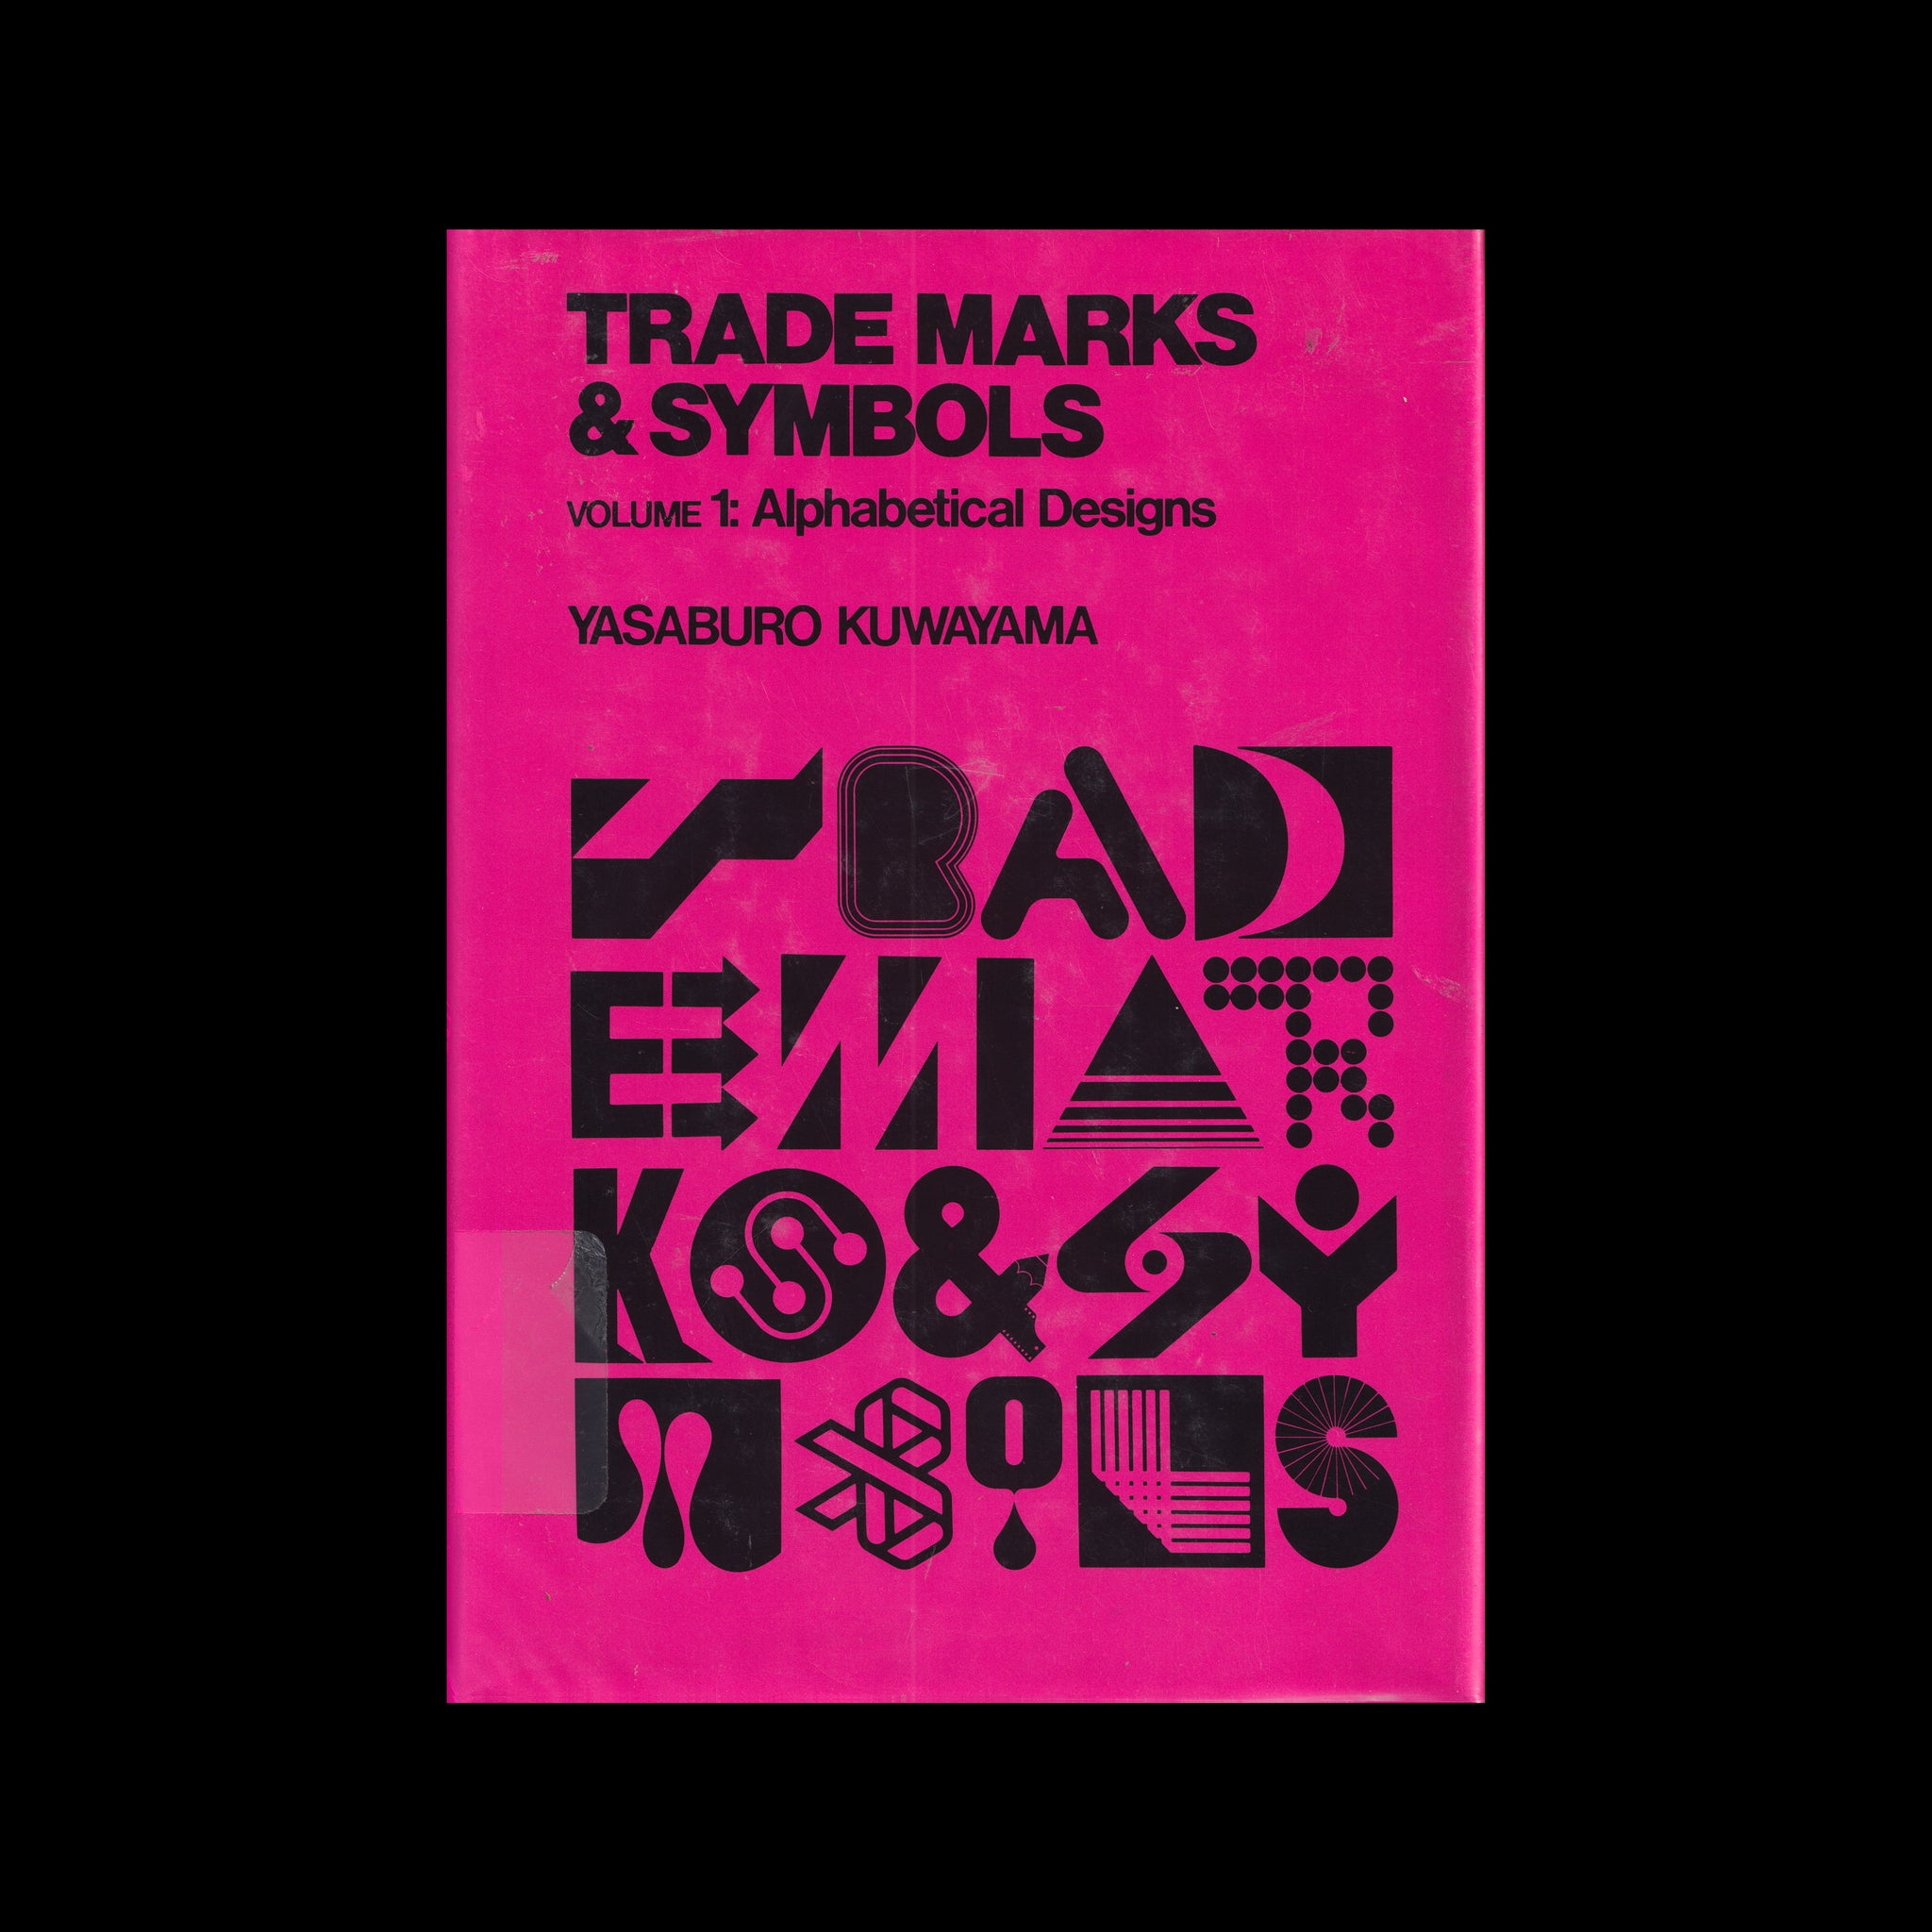 Trademarks & Symbols Volume 1, 1973